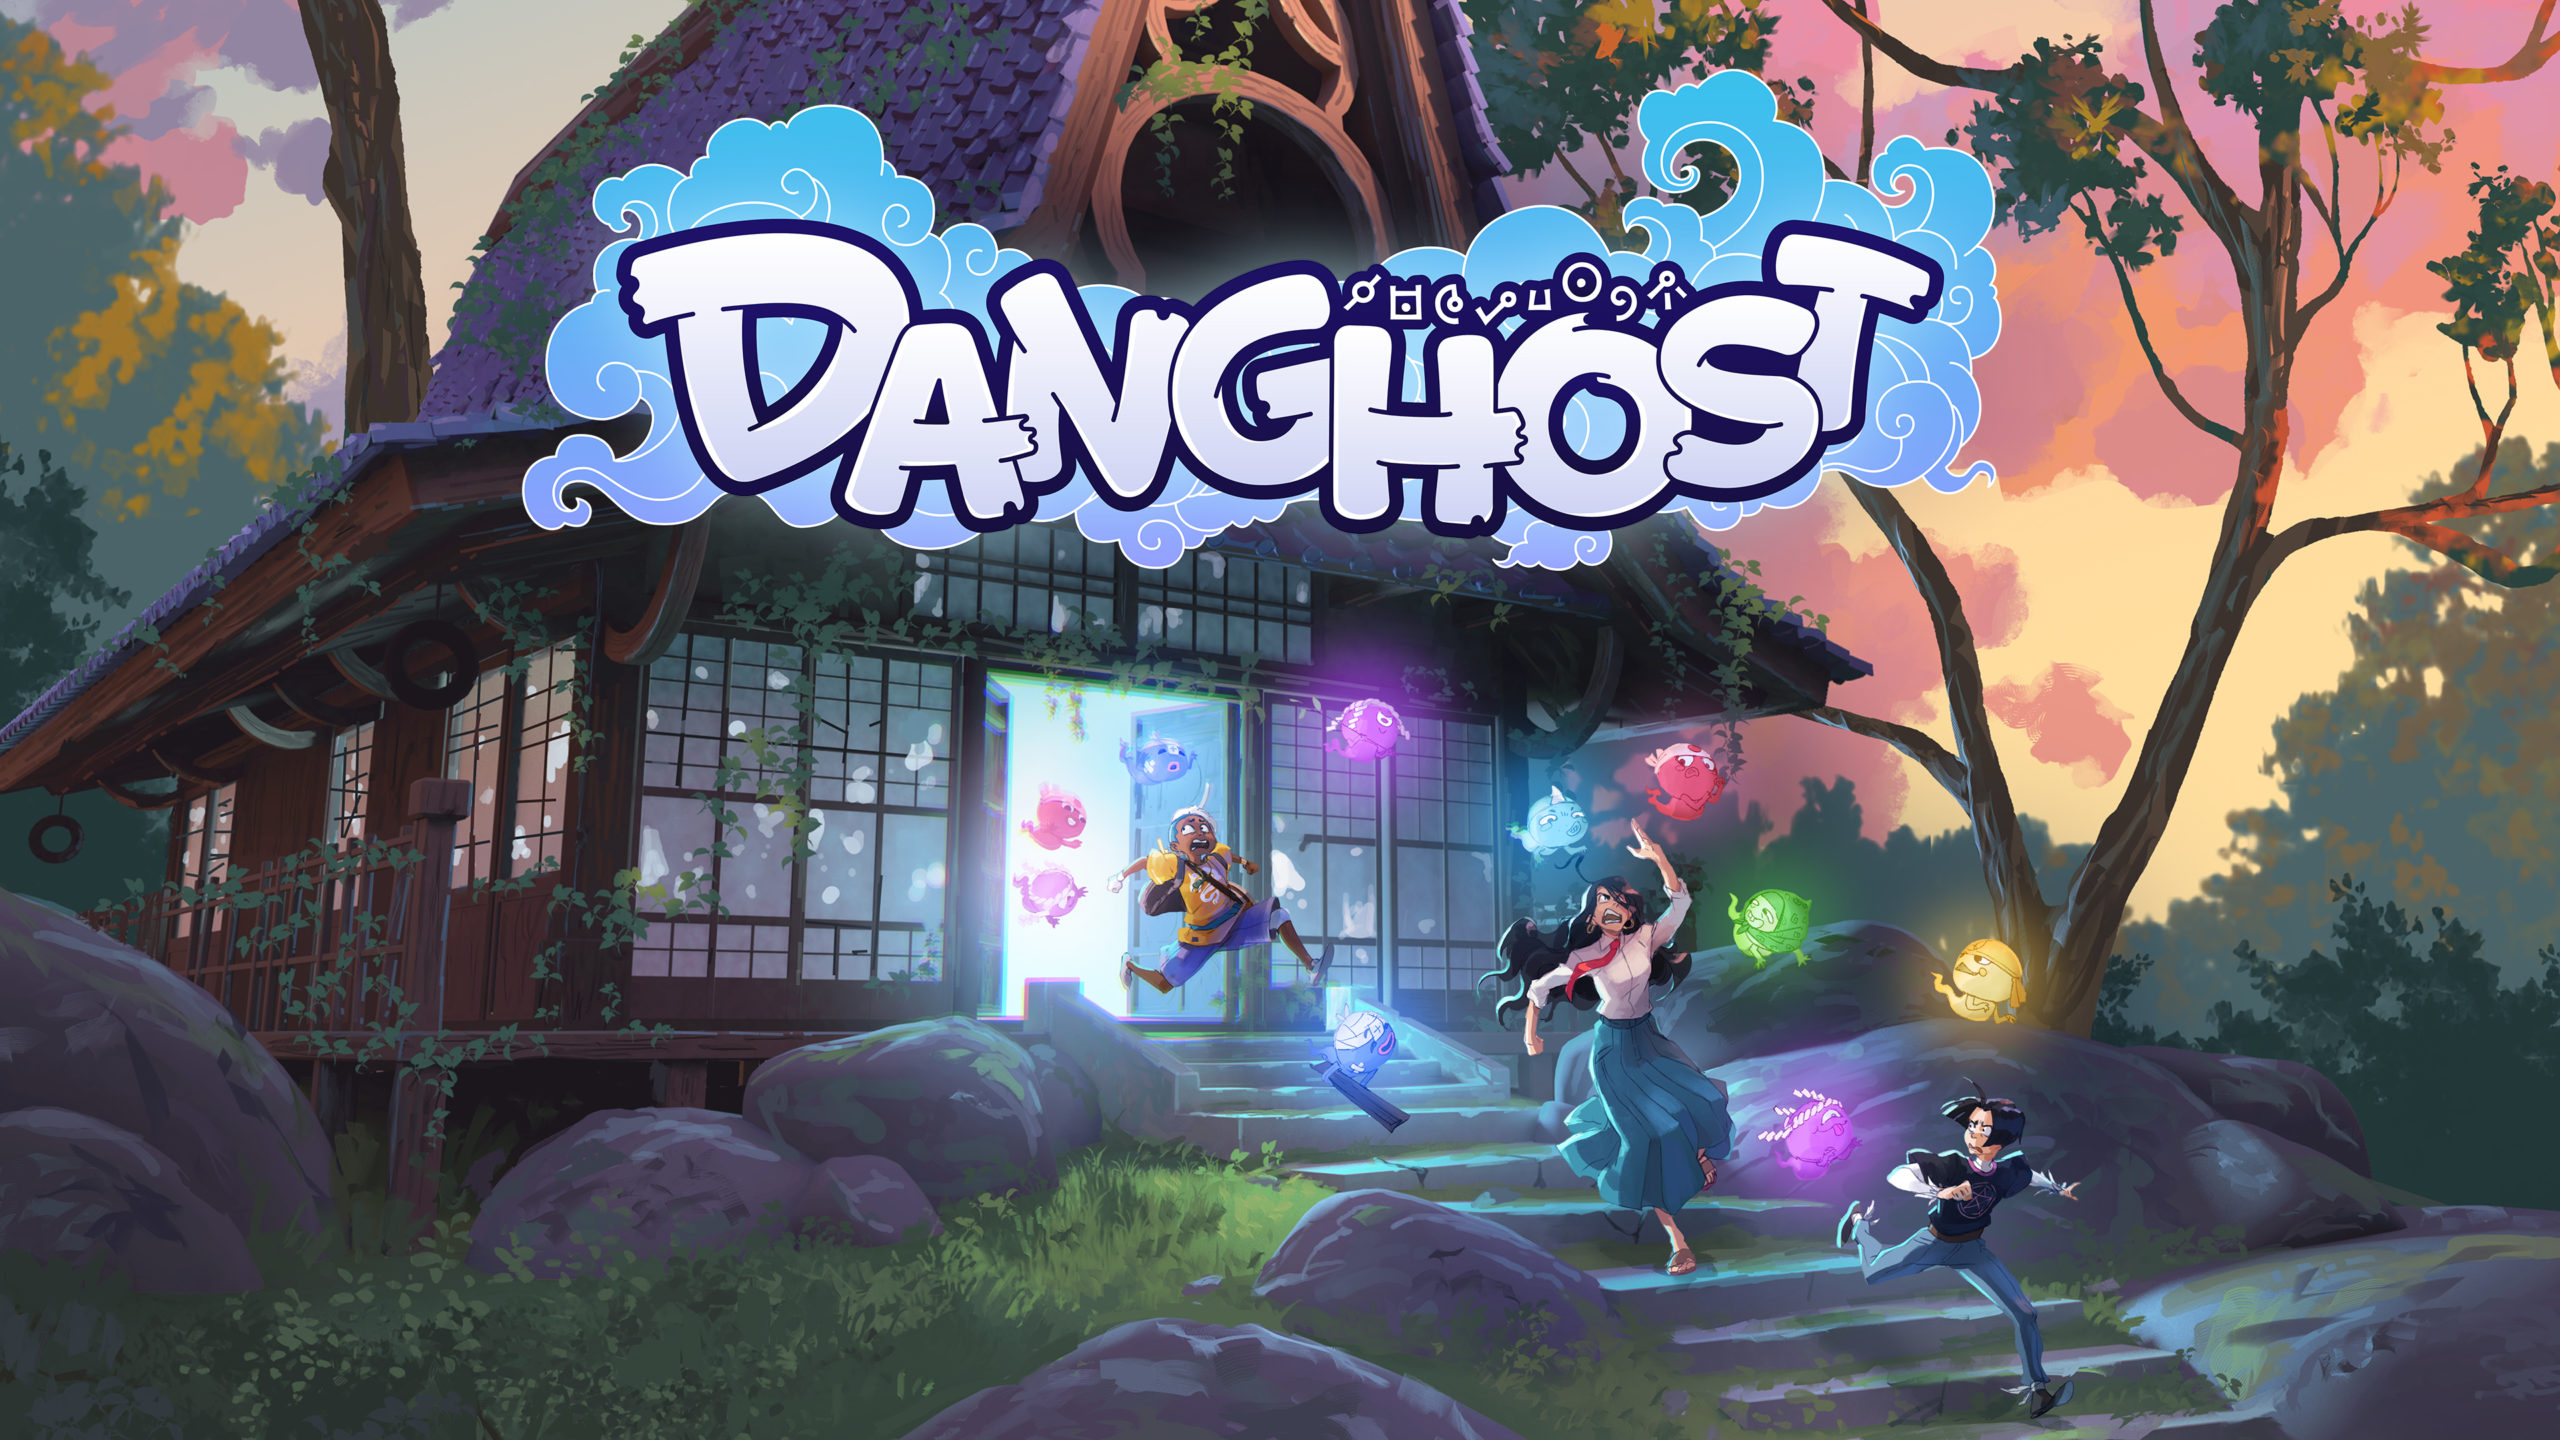 Danghost - Key Art and logo